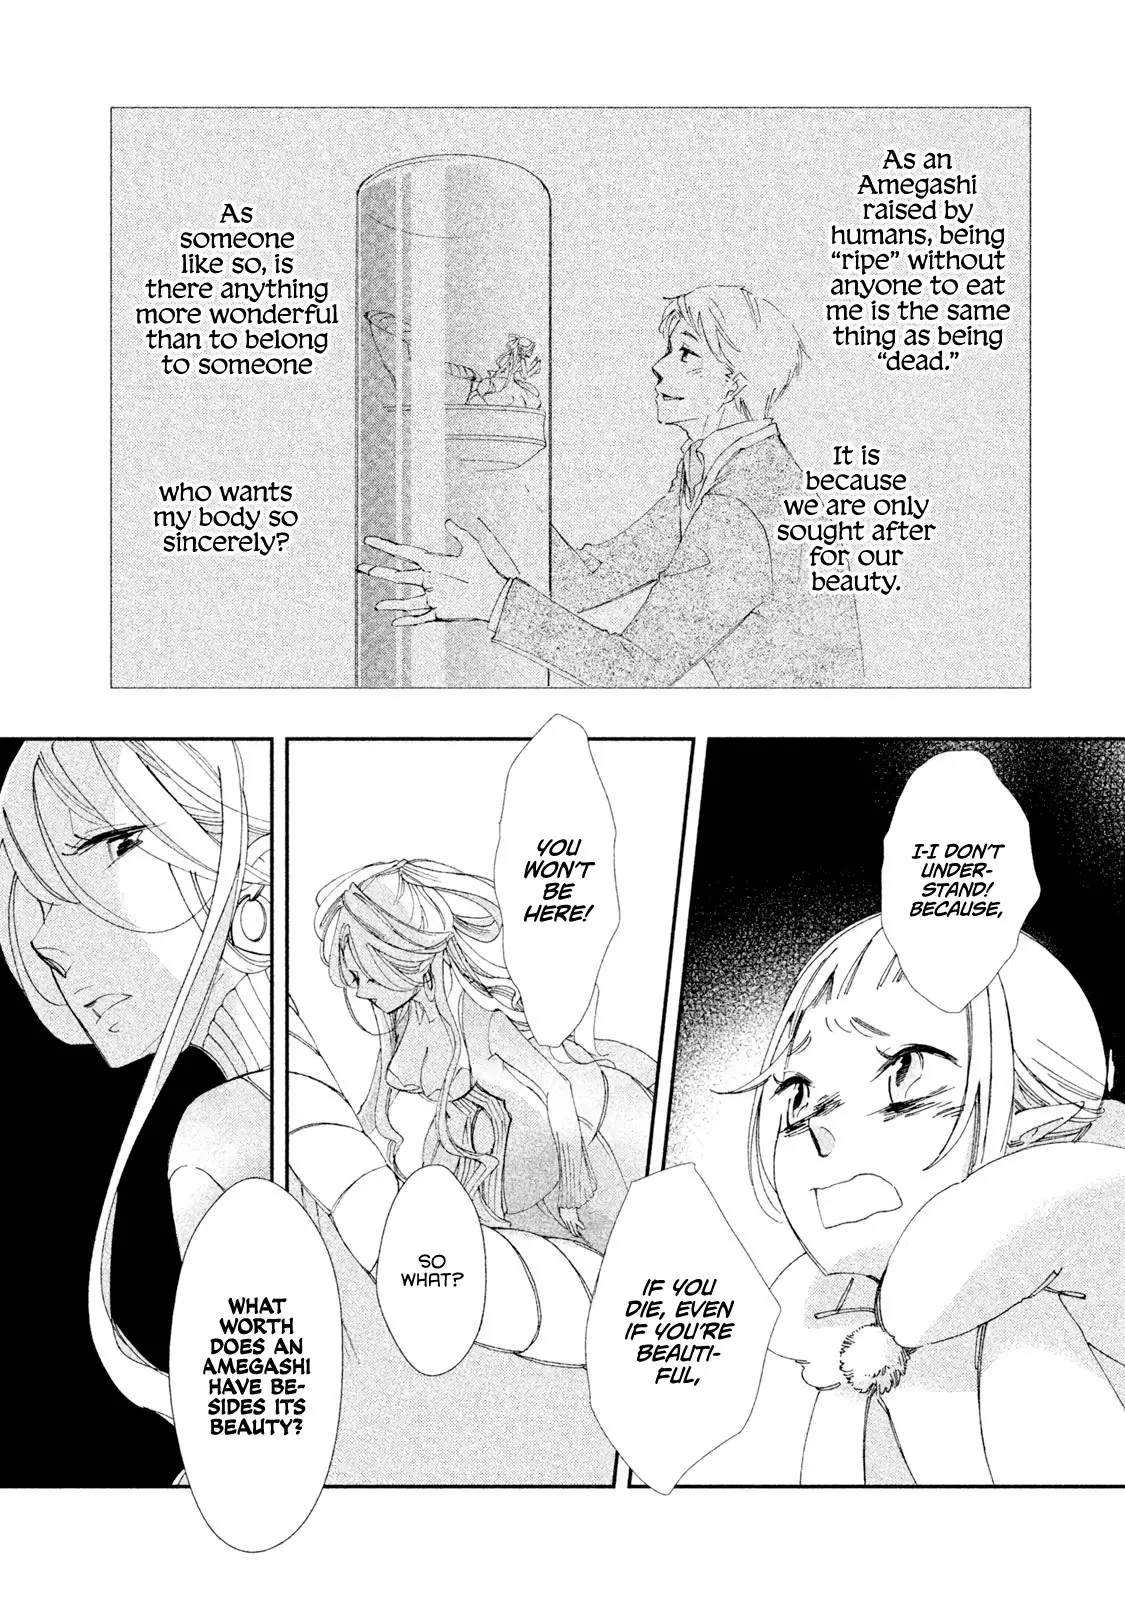 Amegashi - 5 page 21